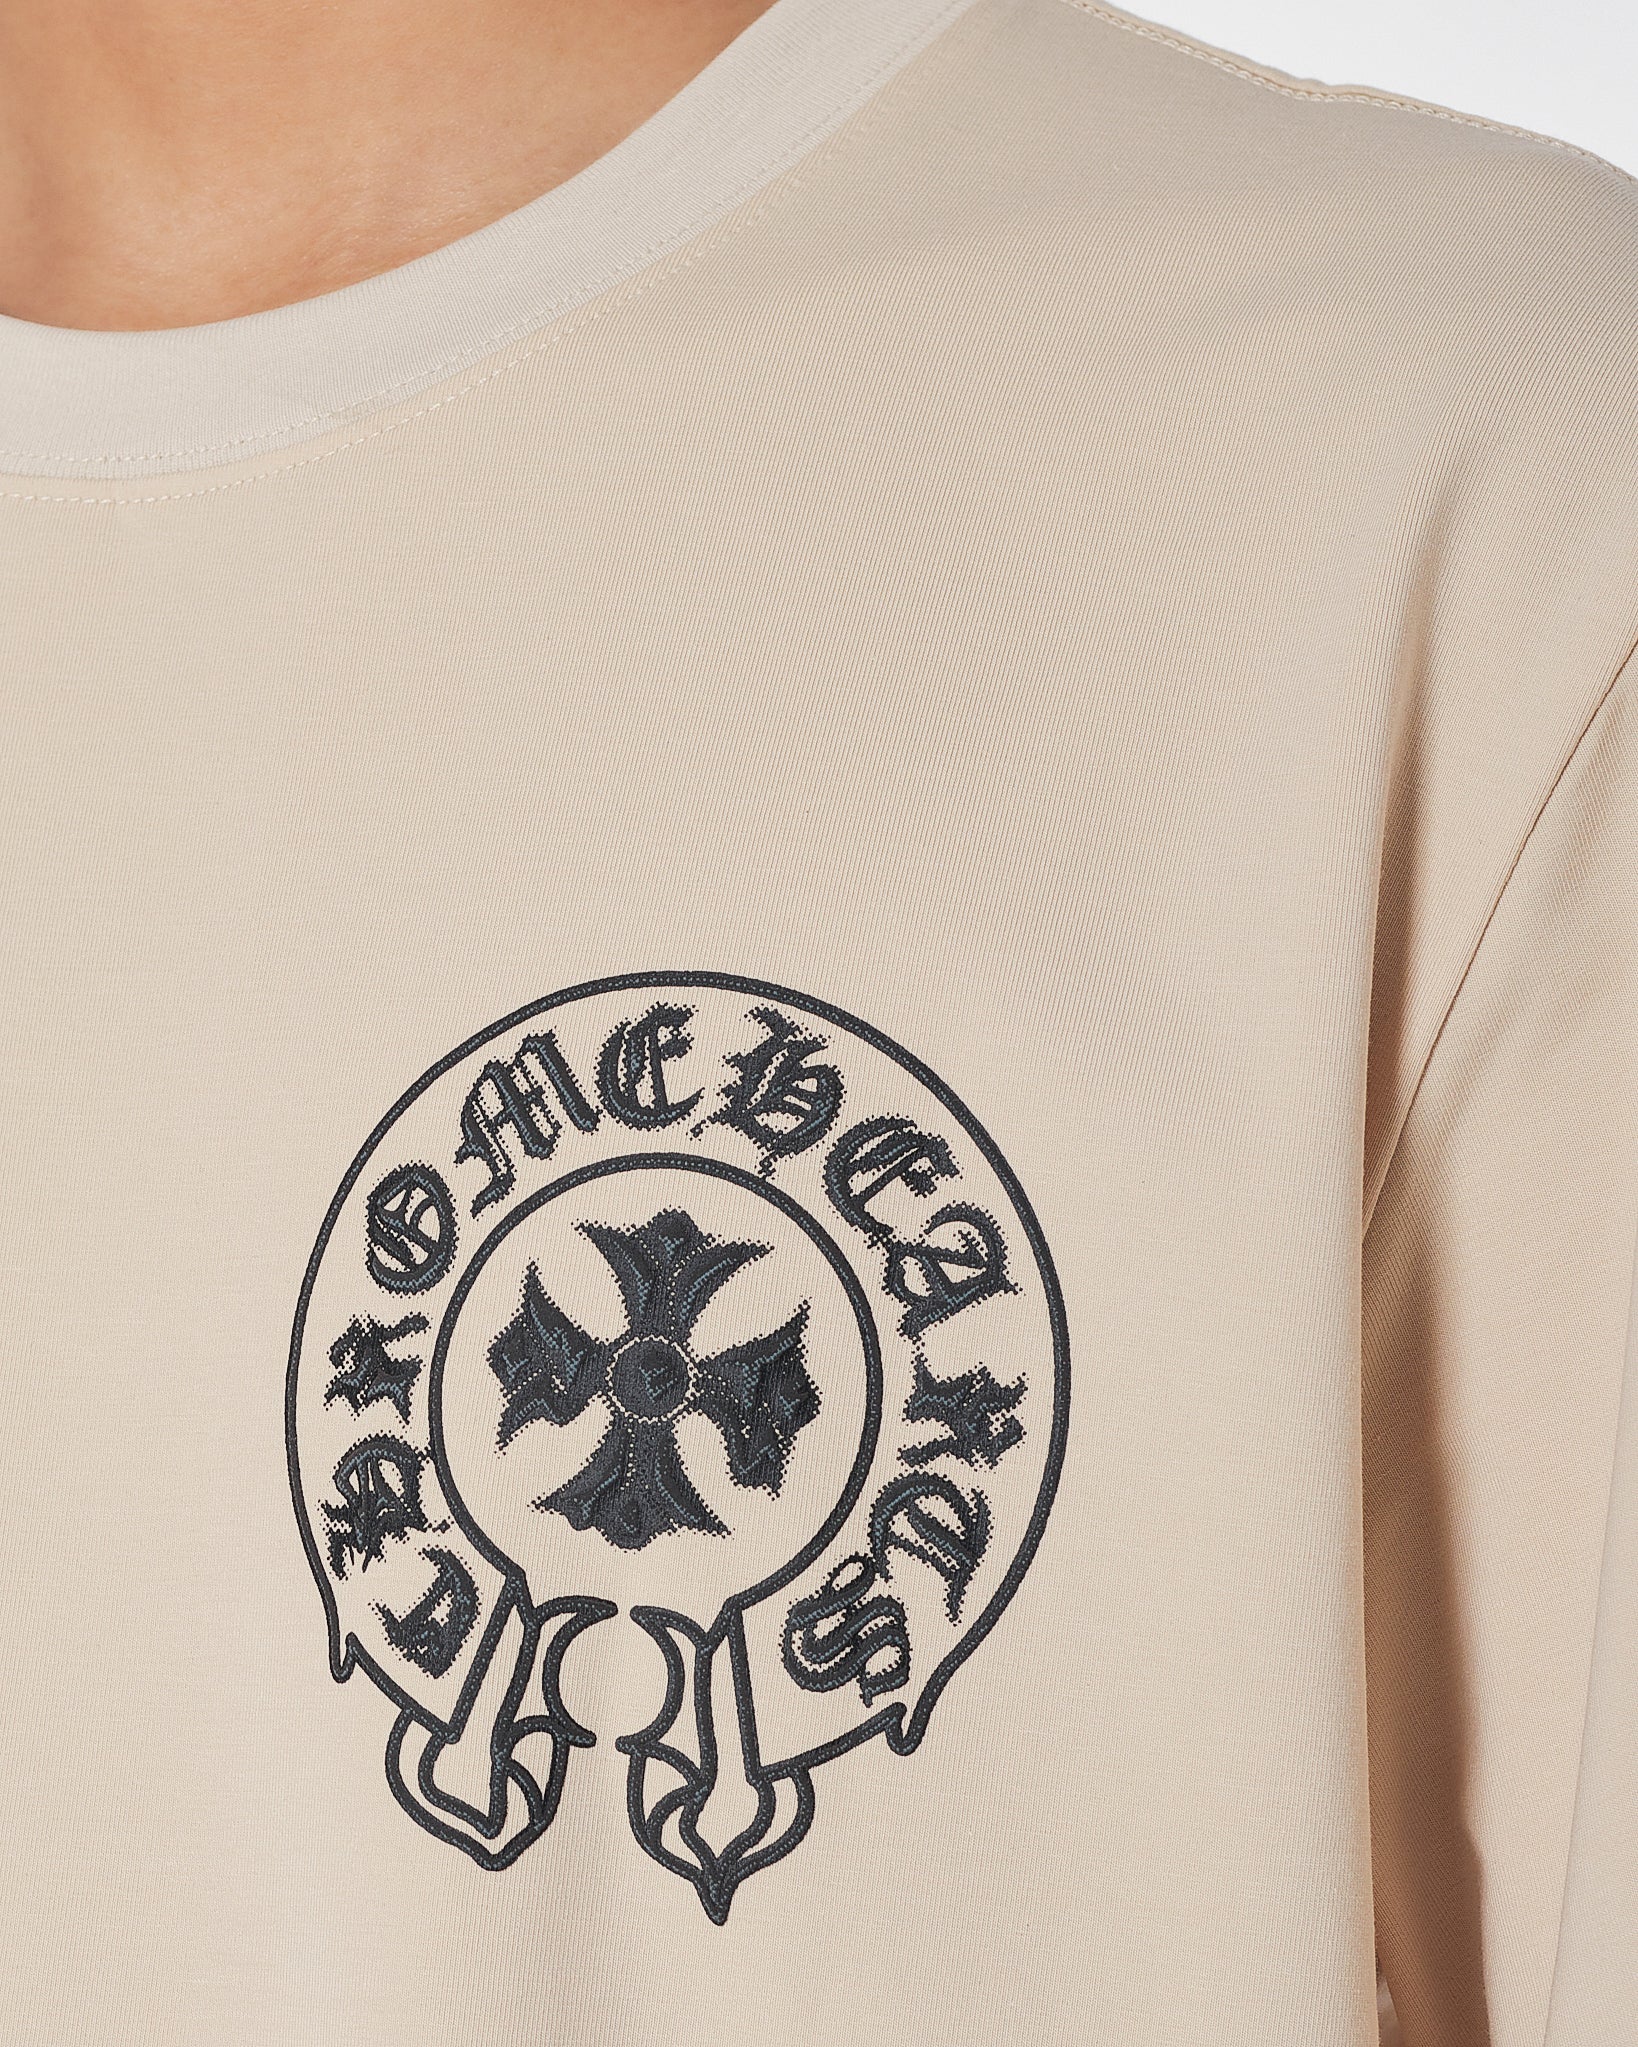 CH Cross Back Logo Printed Men White T-Shirt 15.90